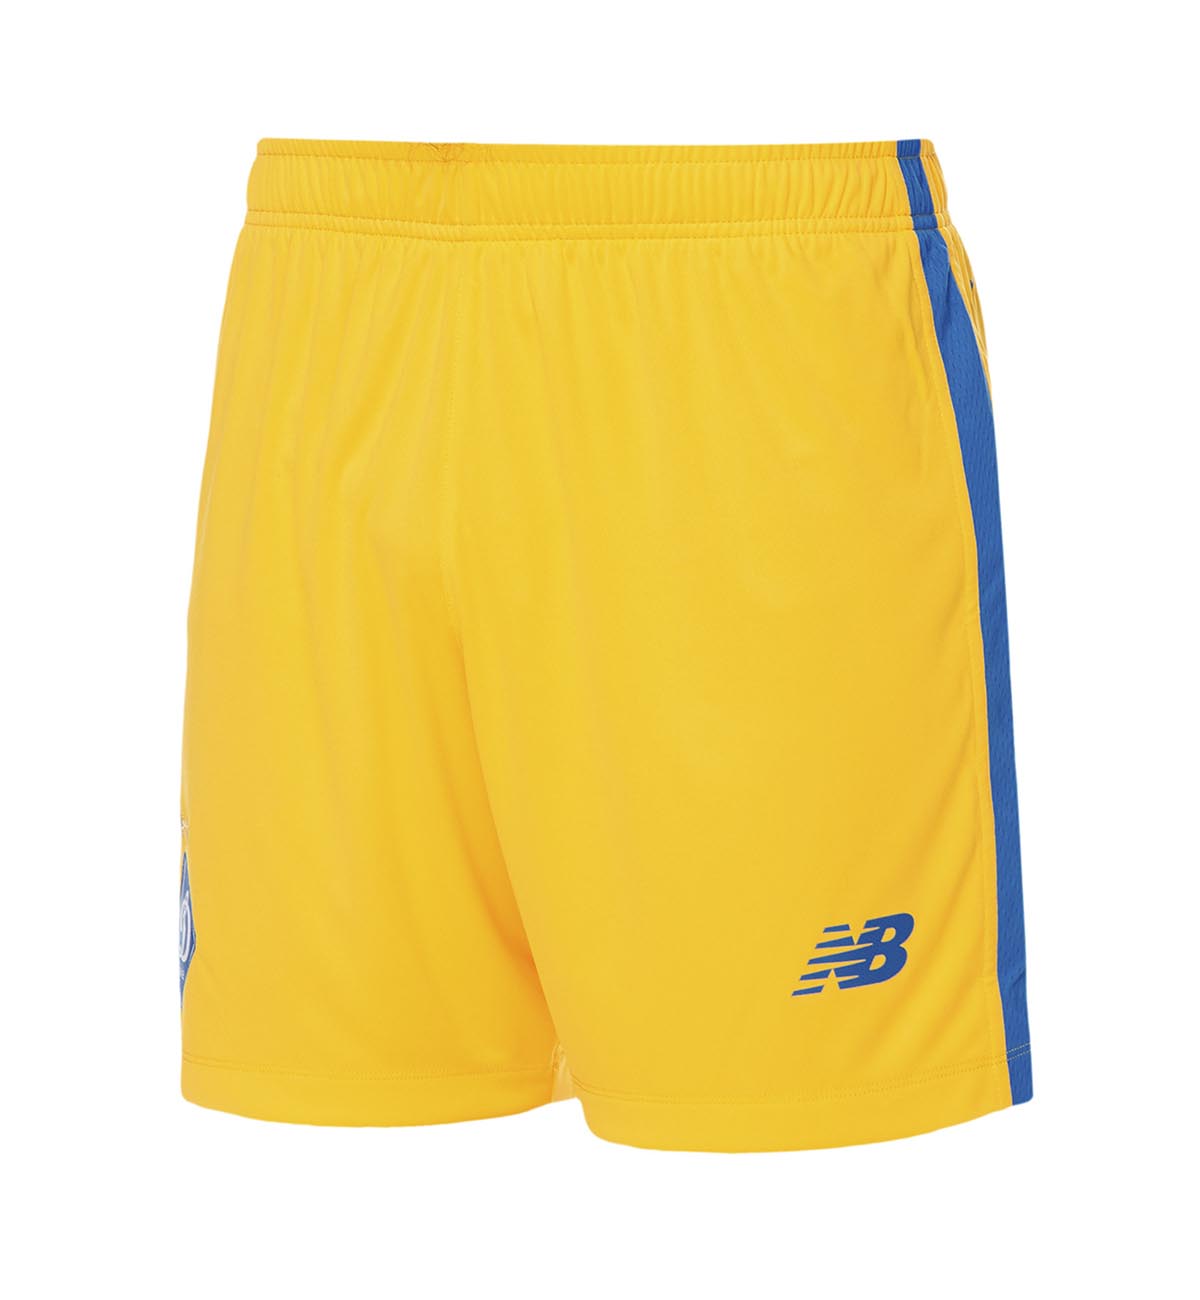 FCDK 3rd yellow shorts